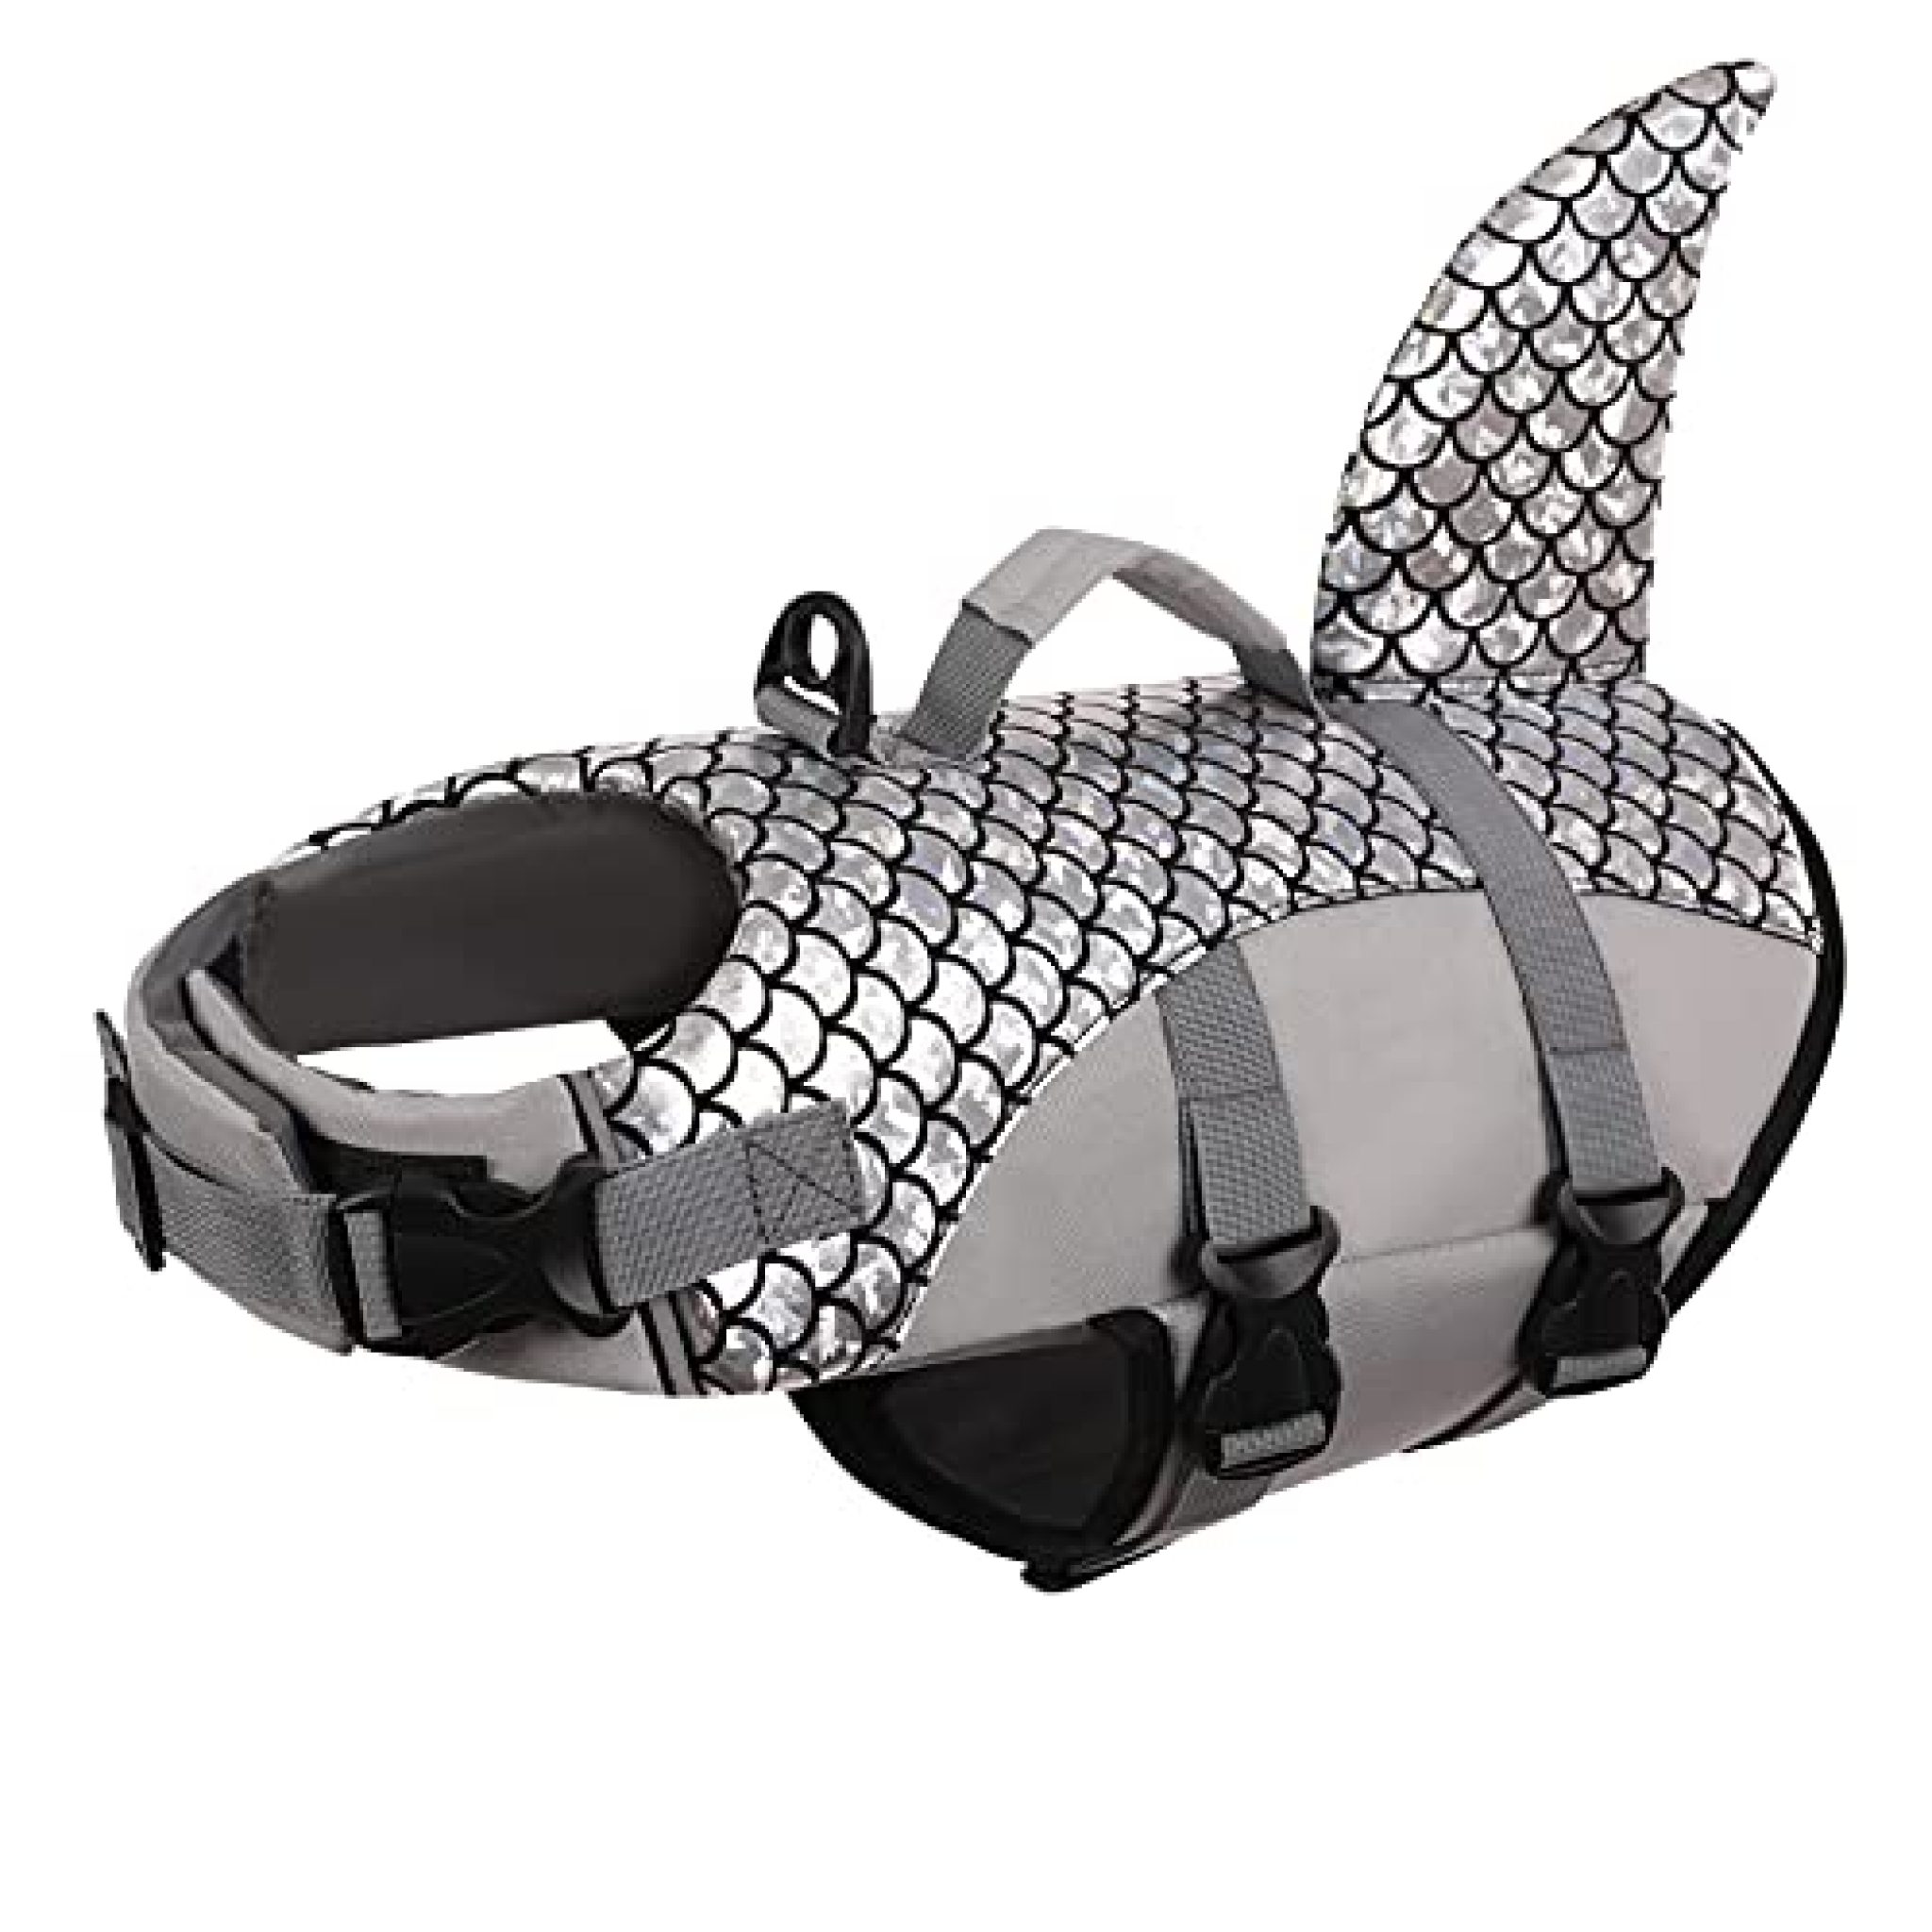 Mermaid Shark Dog Life Jacket - Adorable Pet Flotation Vest - Yinz Buy